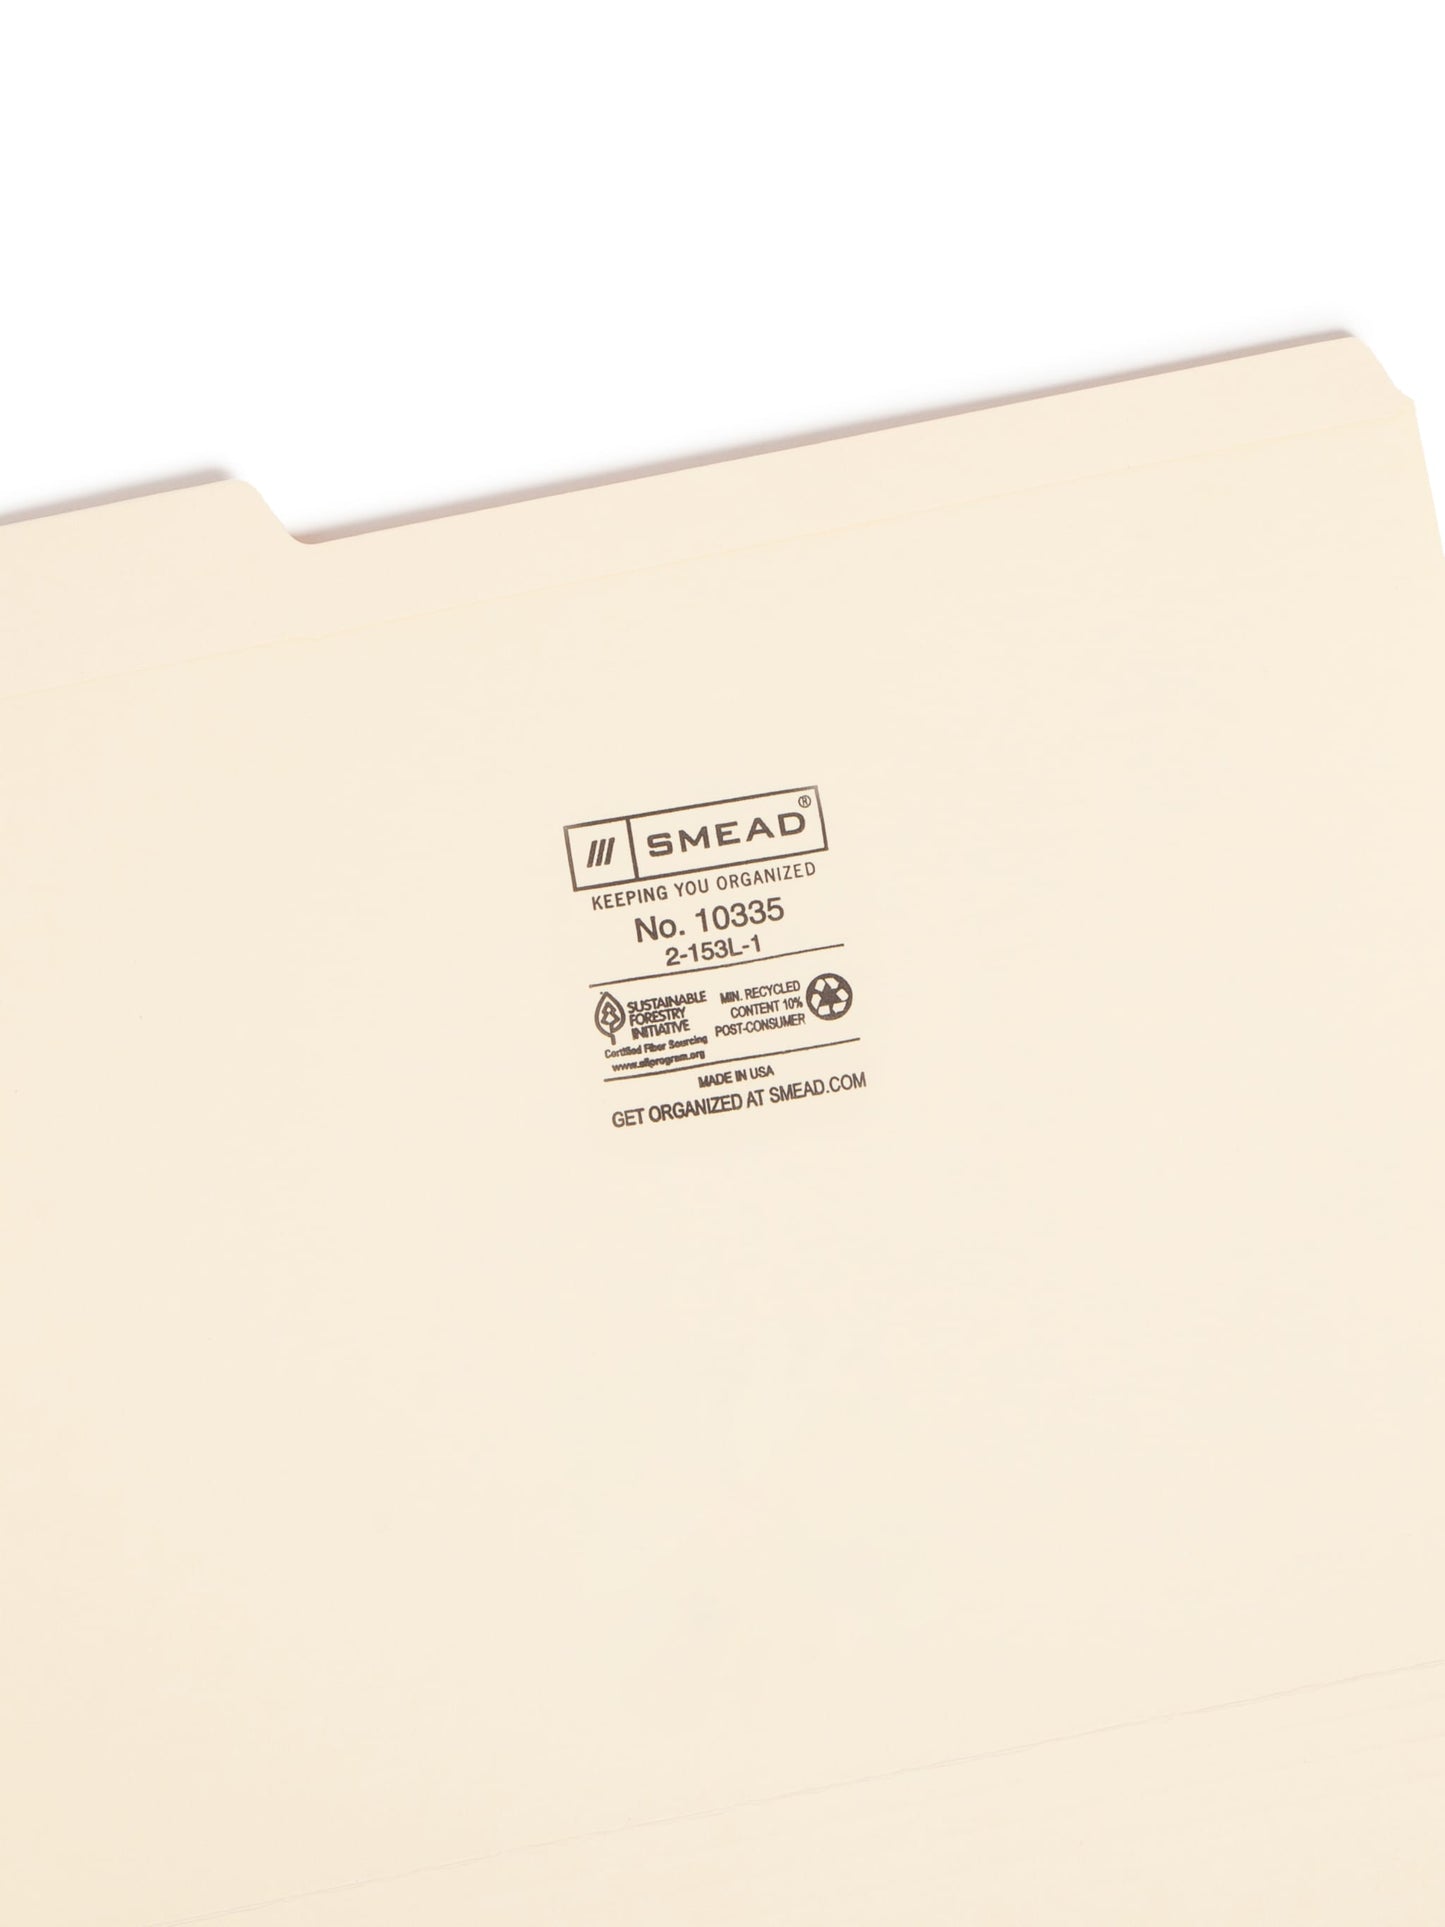 Reinforced Tab File Folders, 1/3-Cut Left Tab, Manila Color, Letter Size, Set of 100, 086486103350